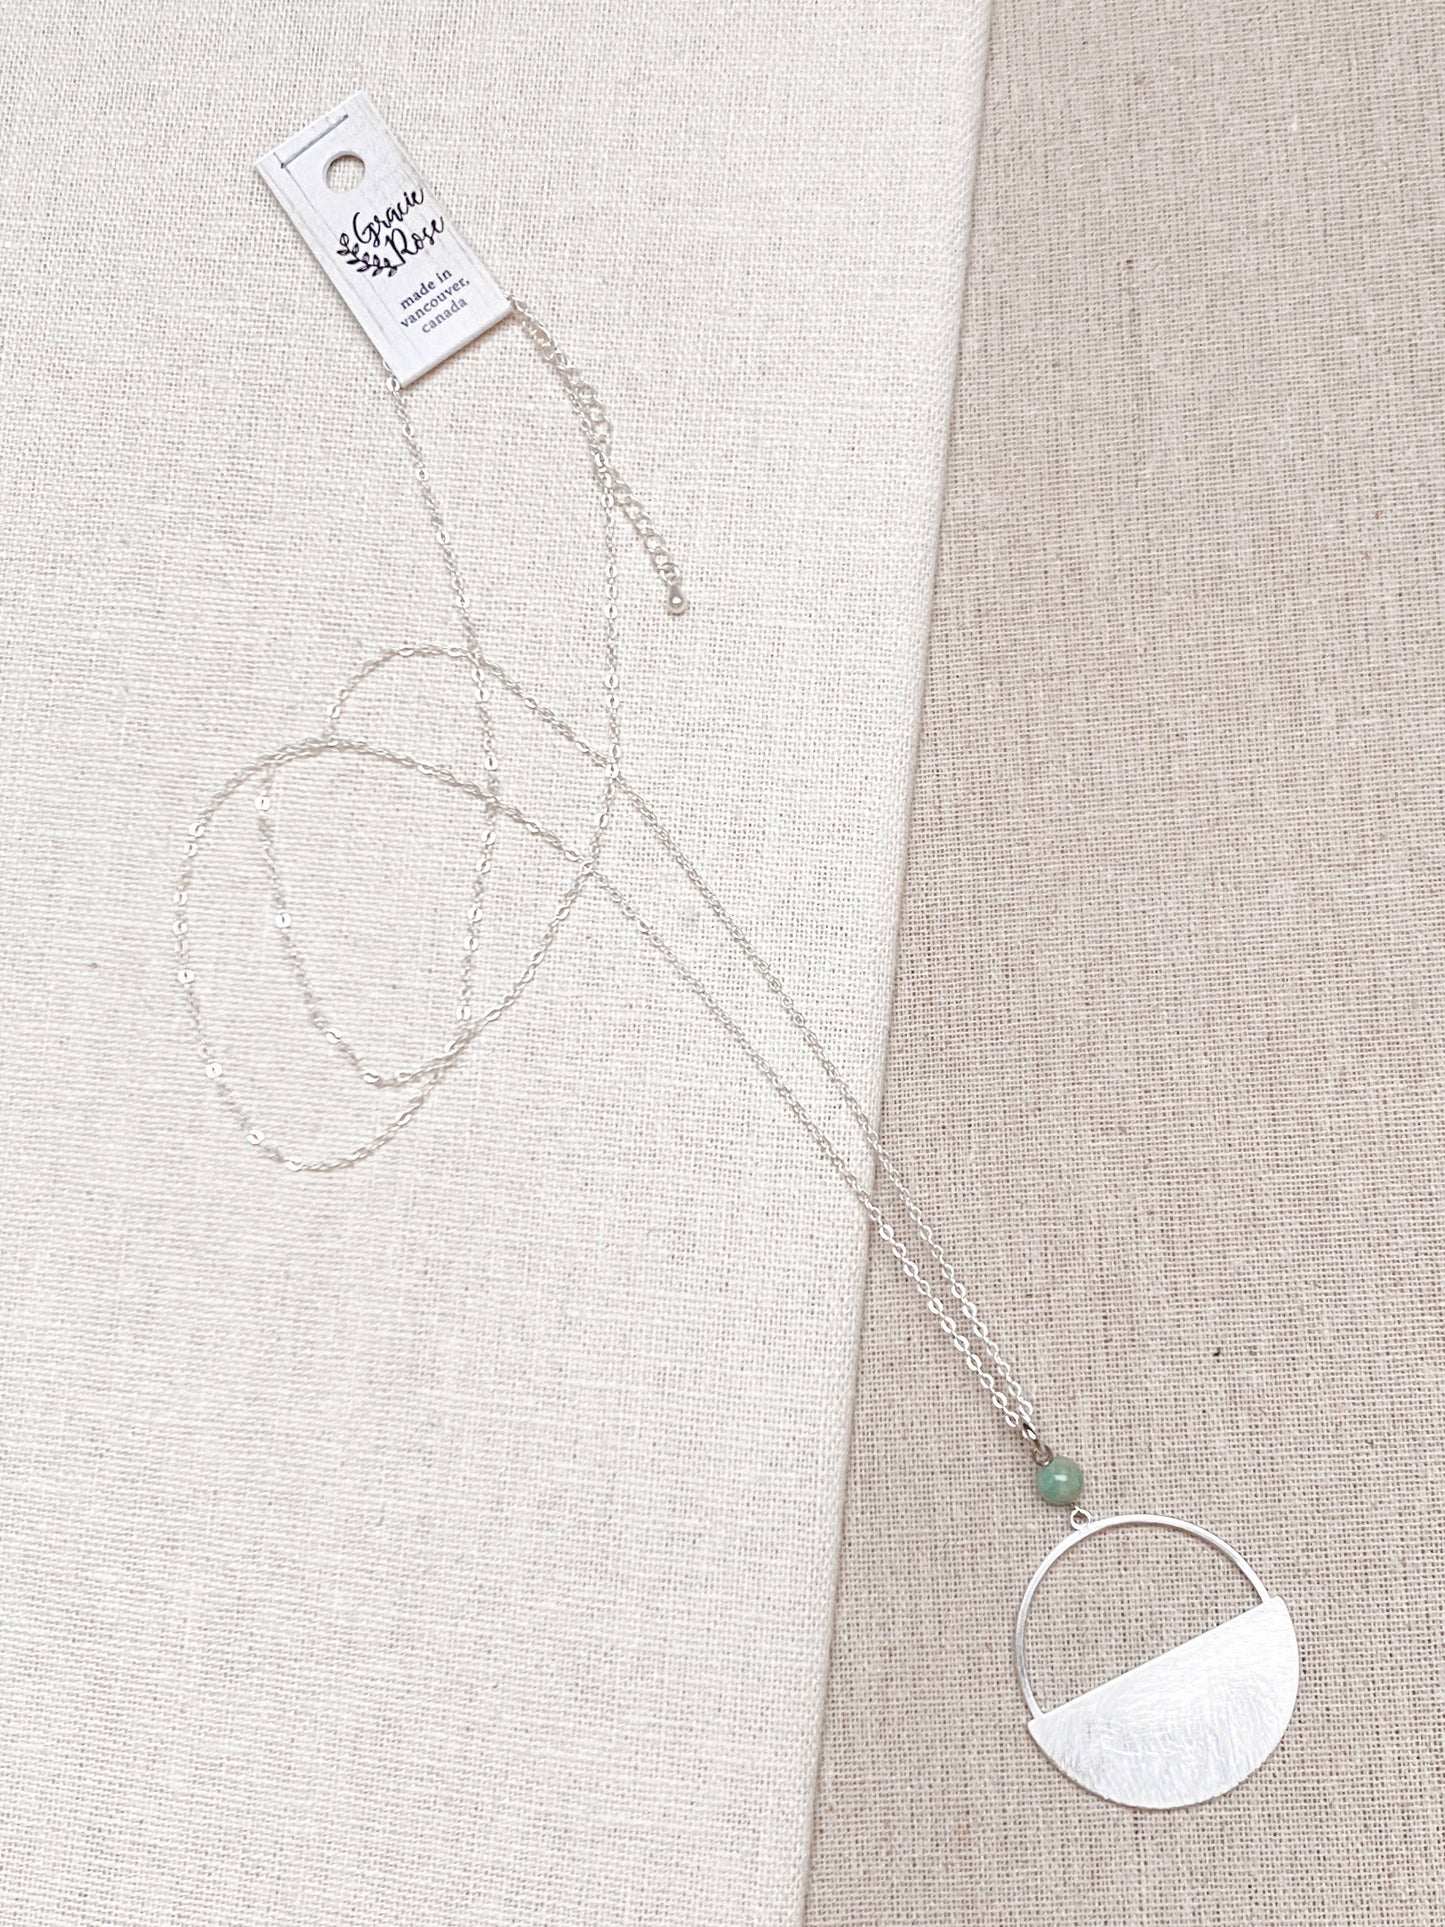 Gracie Rose Designs - Minimalist Matte Silver Amazonite Geometric Pendant Necklace